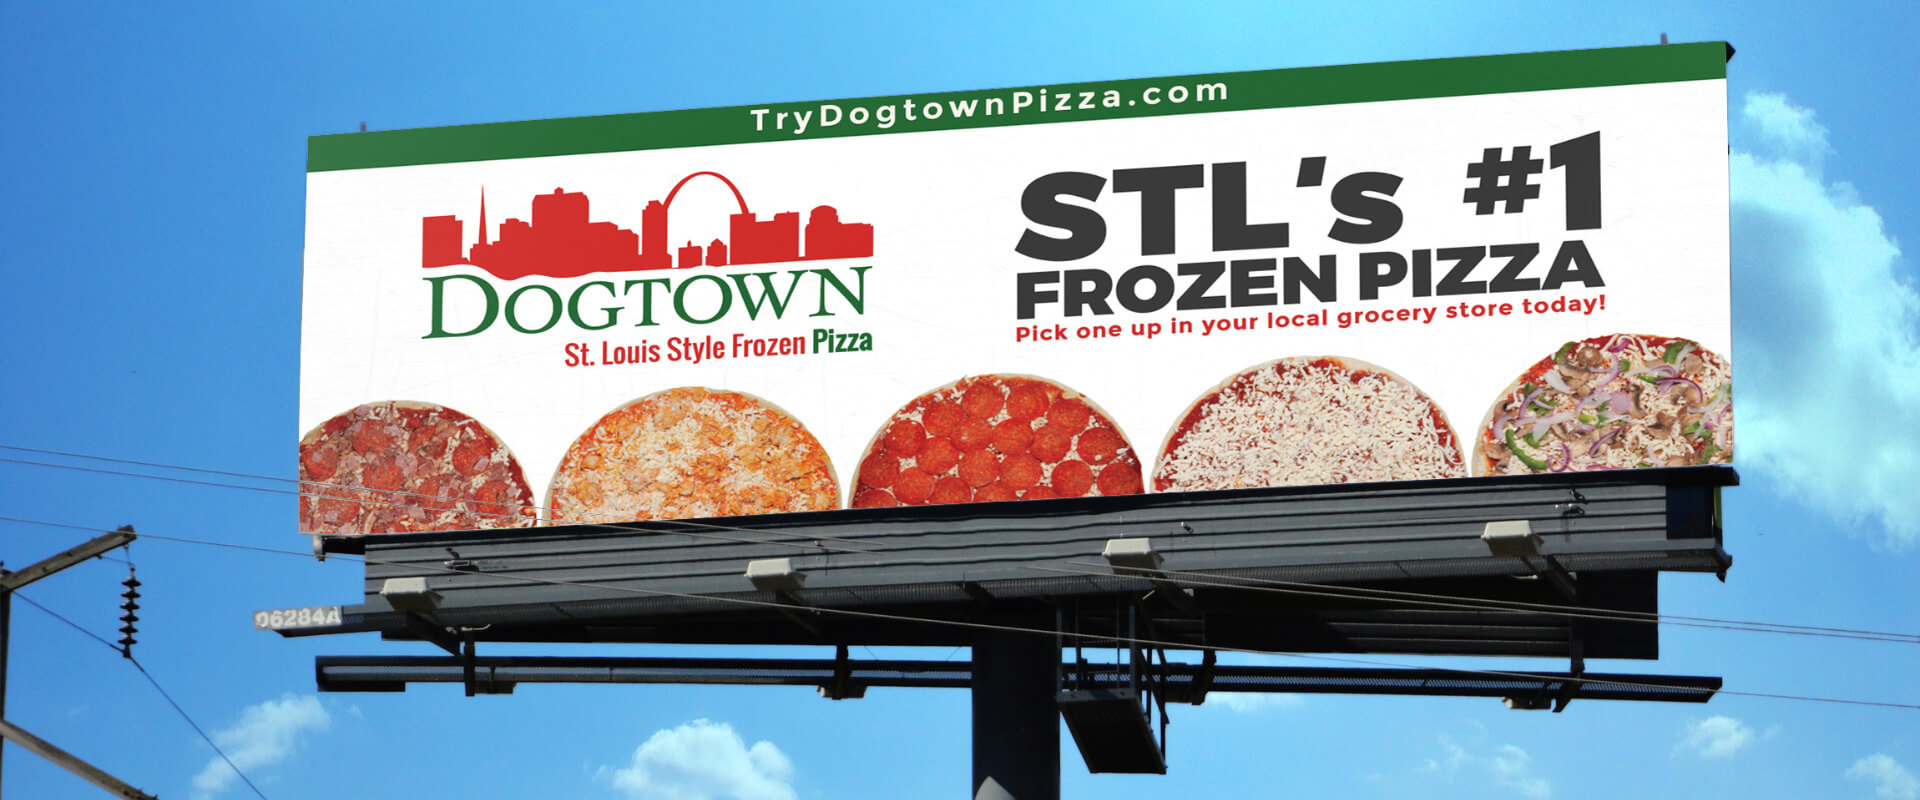 Dogtown Pizza billboard